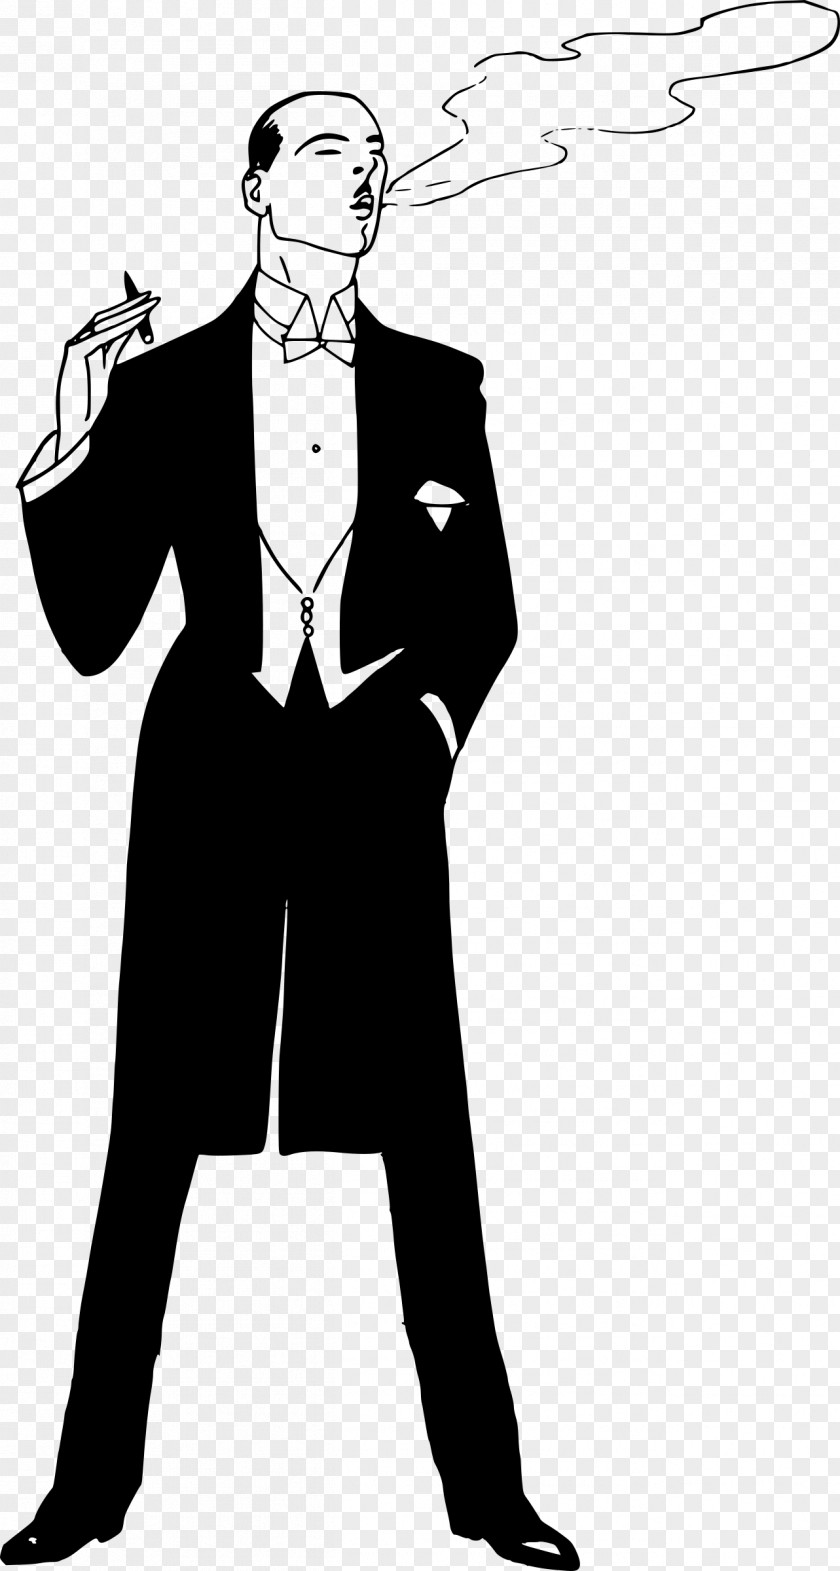 Tuxedo Suit Smoking Clip Art PNG